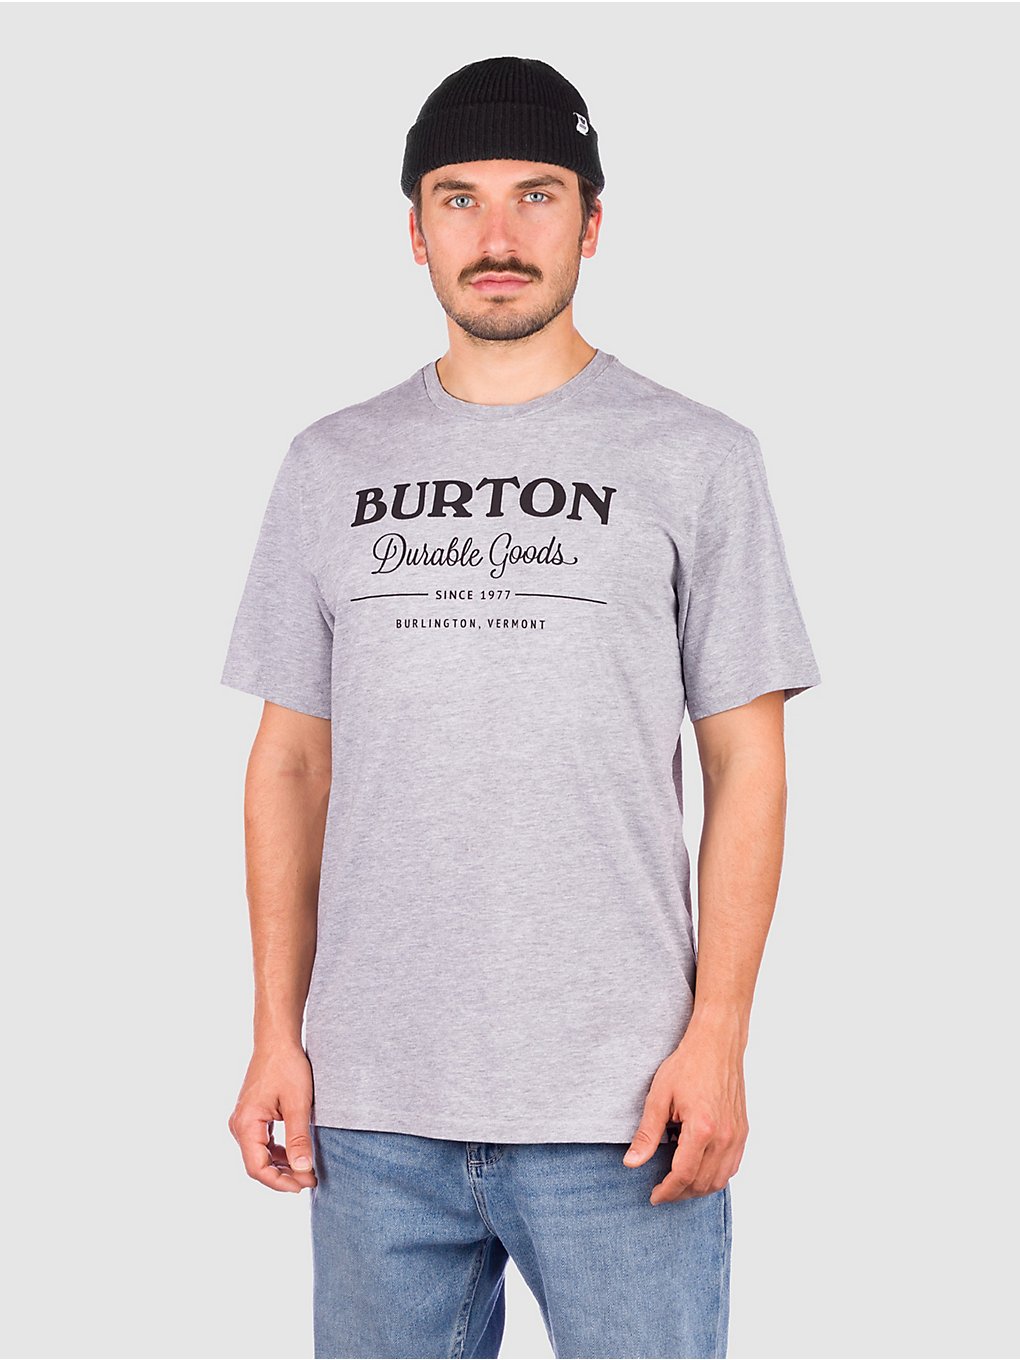 Burton Durable Goods T-Shirt gris